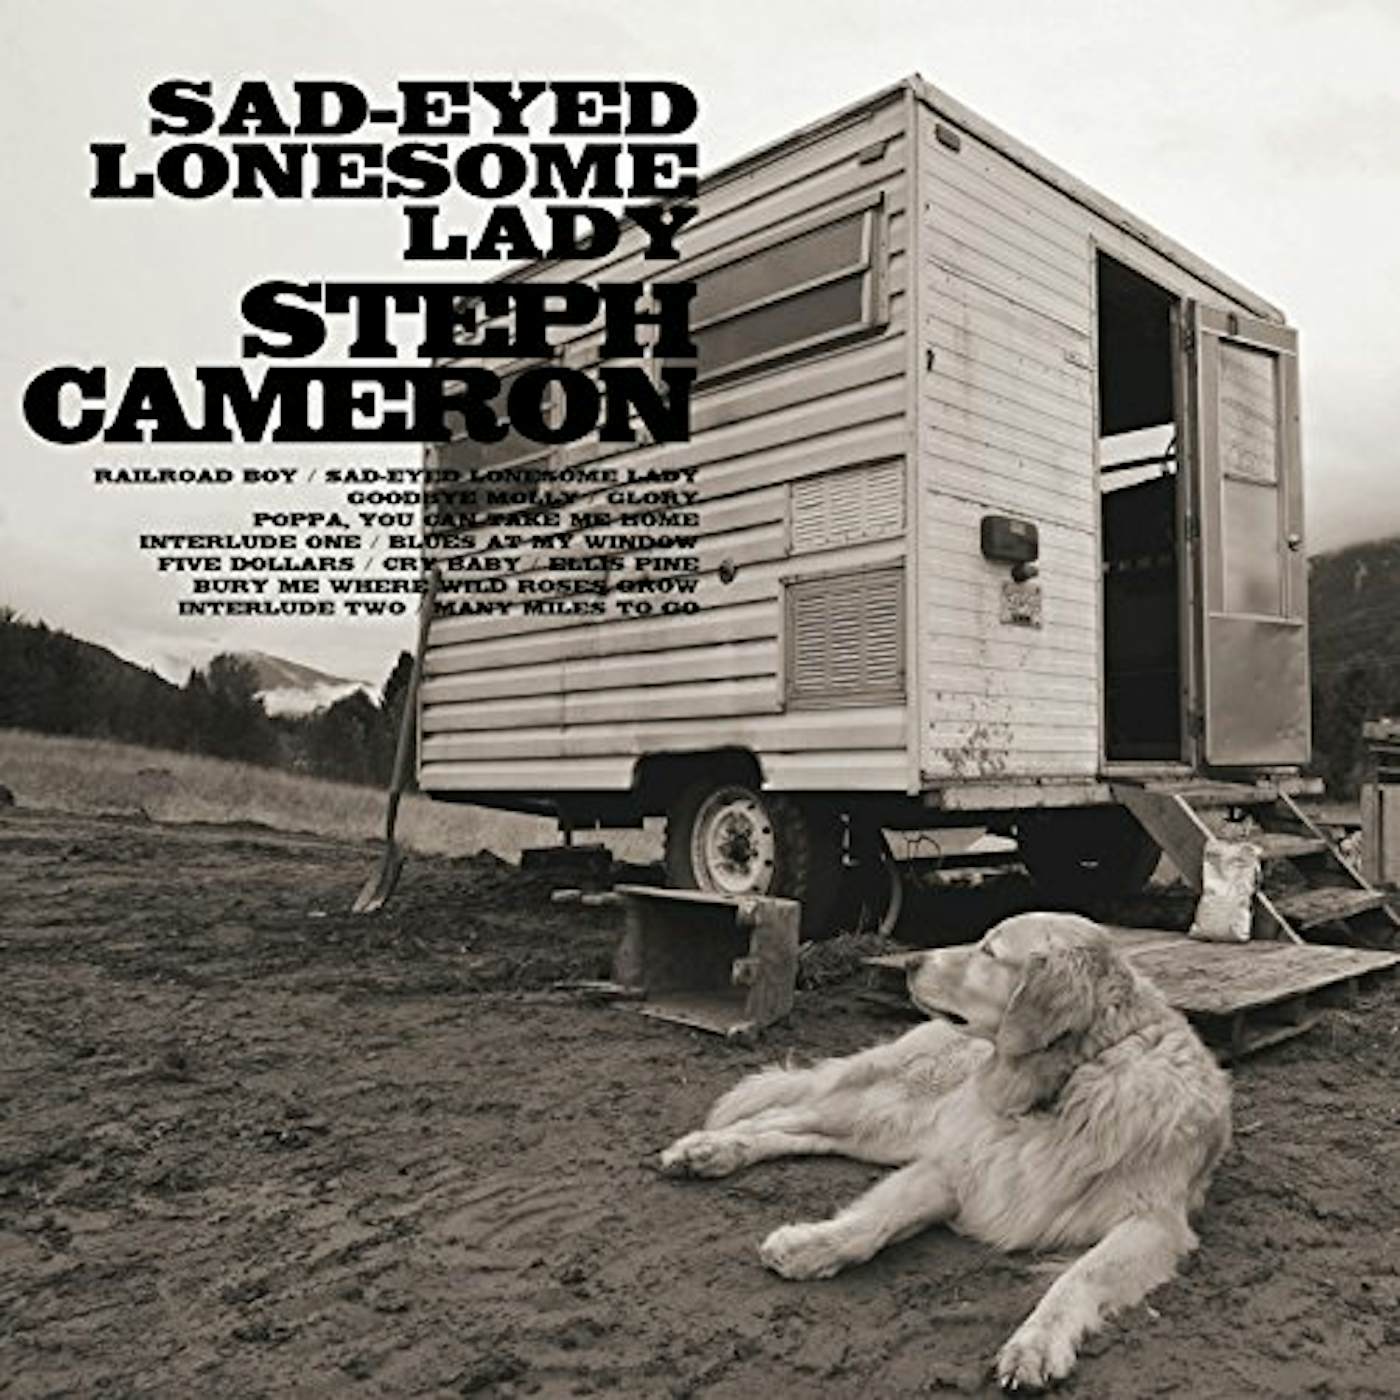 Steph Cameron SAD-EYED LONESOME LADY CD